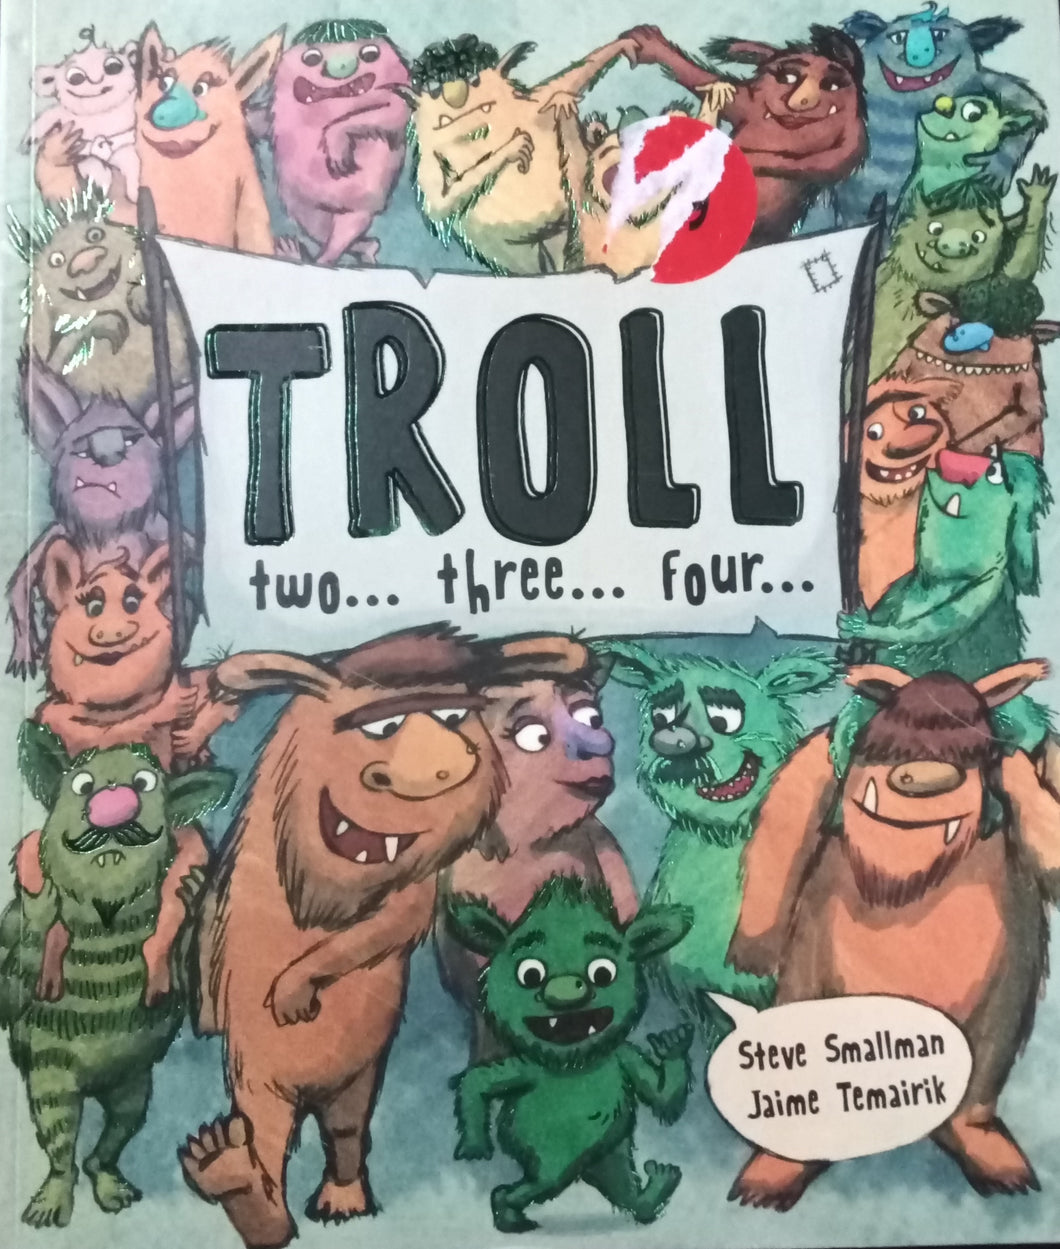 Troll two three four by Steve Smallman